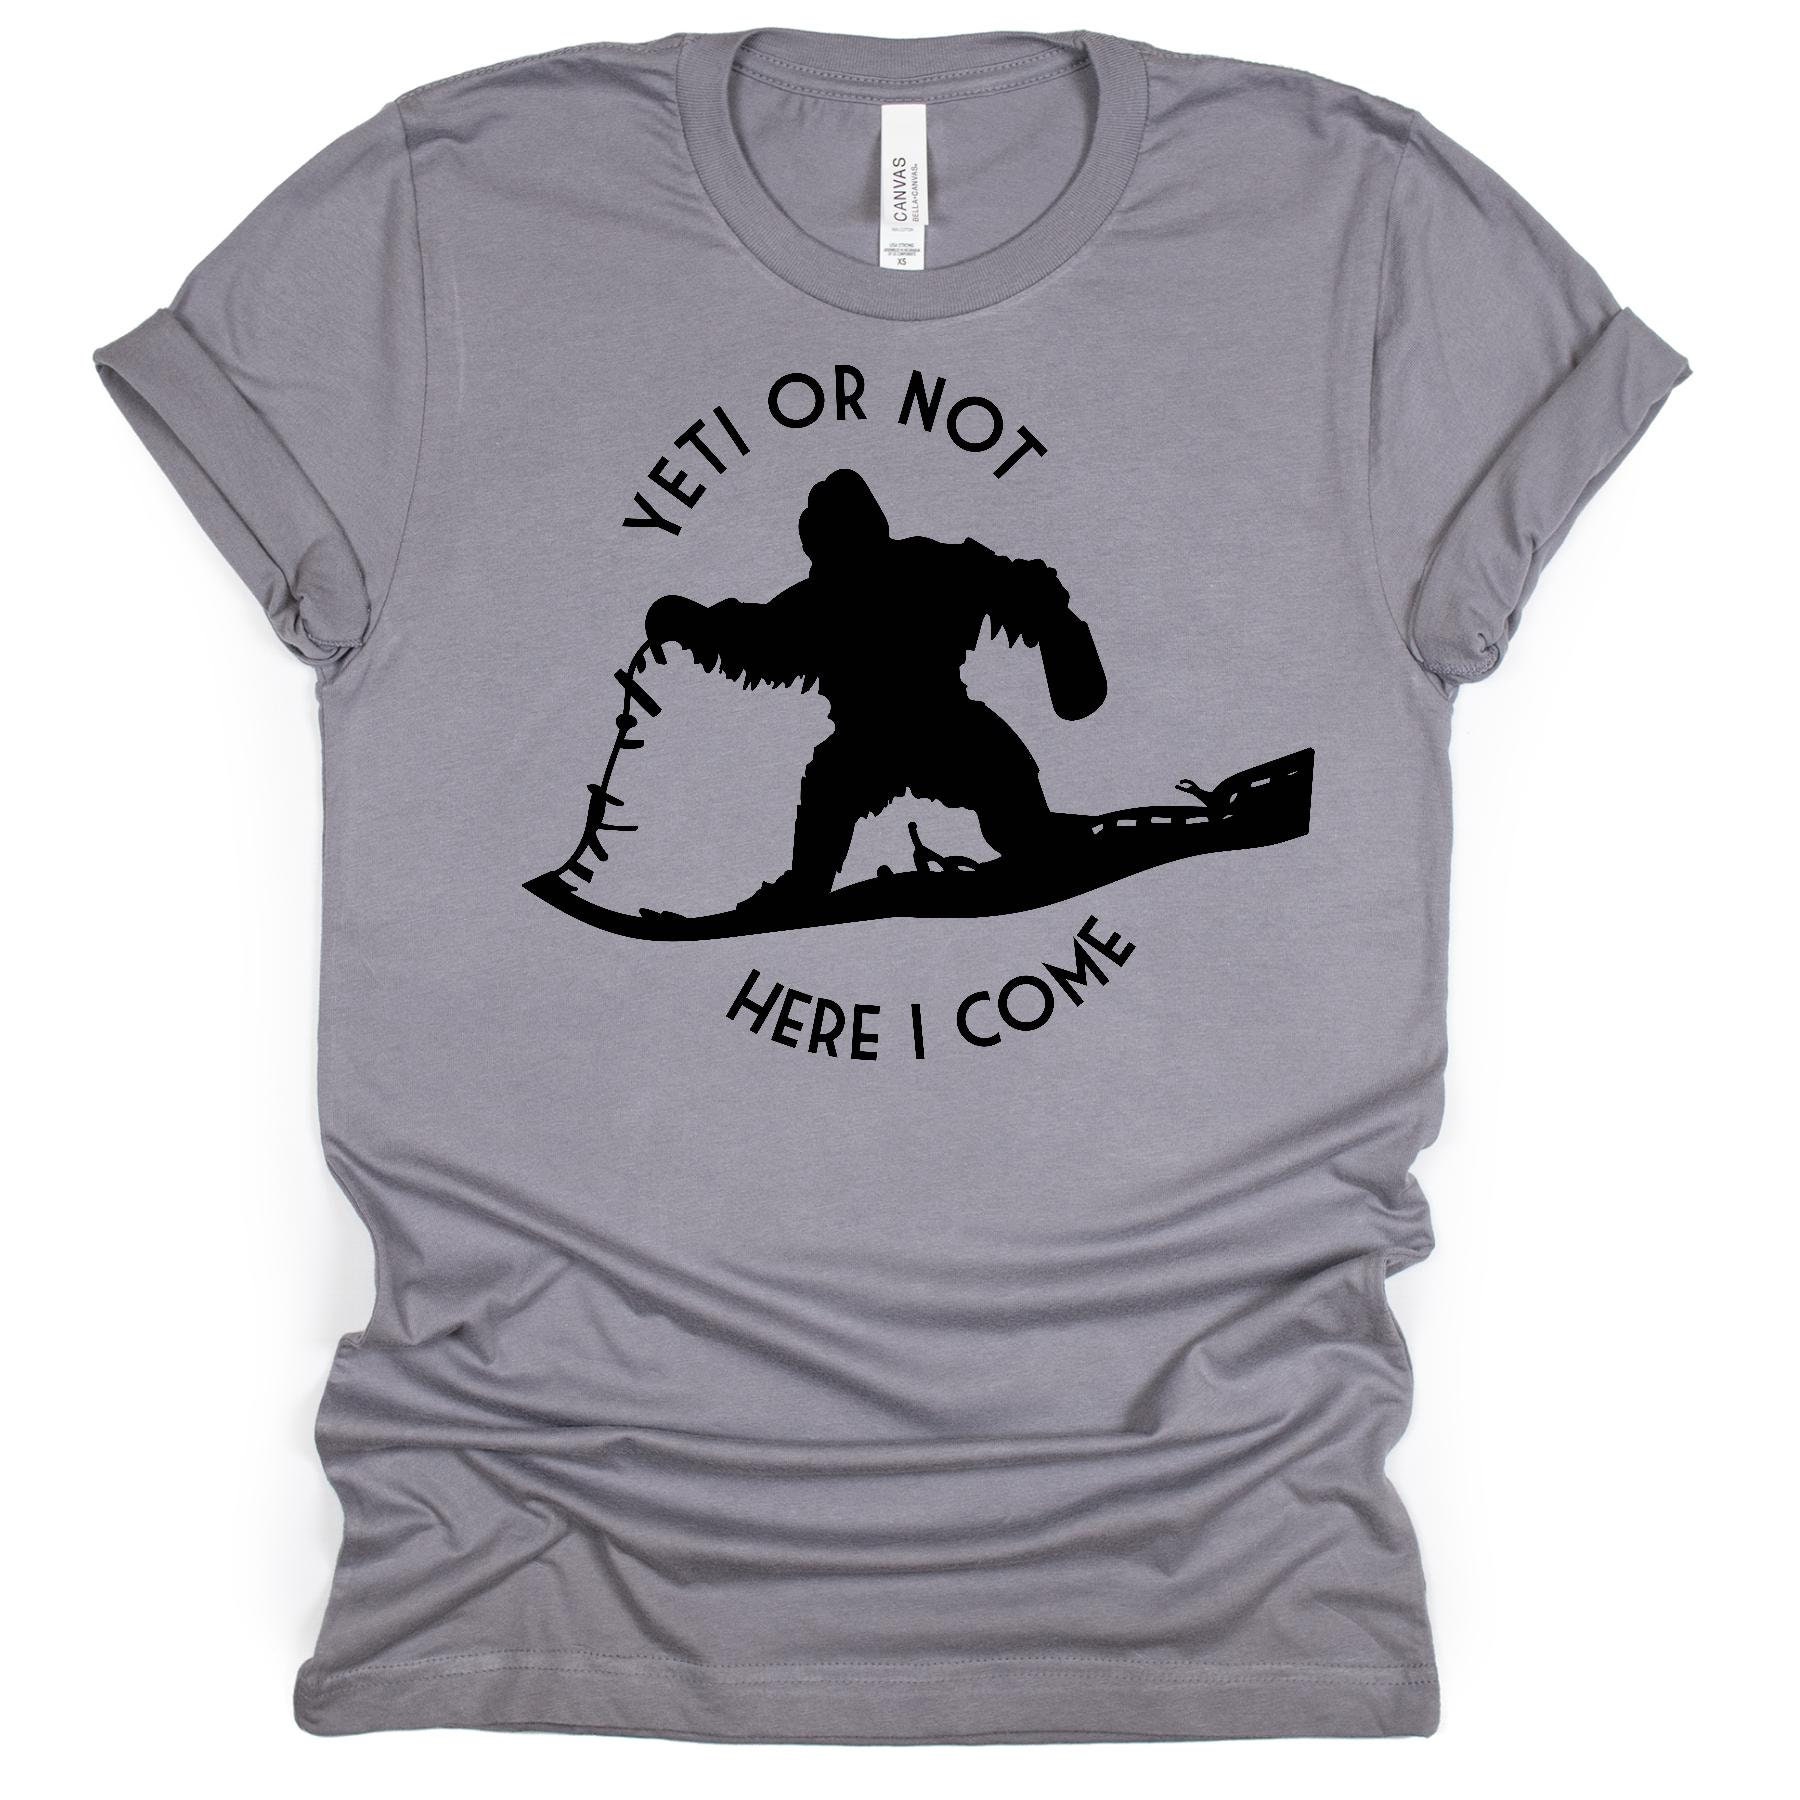 Yeti !! Kids T-Shirt for Sale by lunaticpark